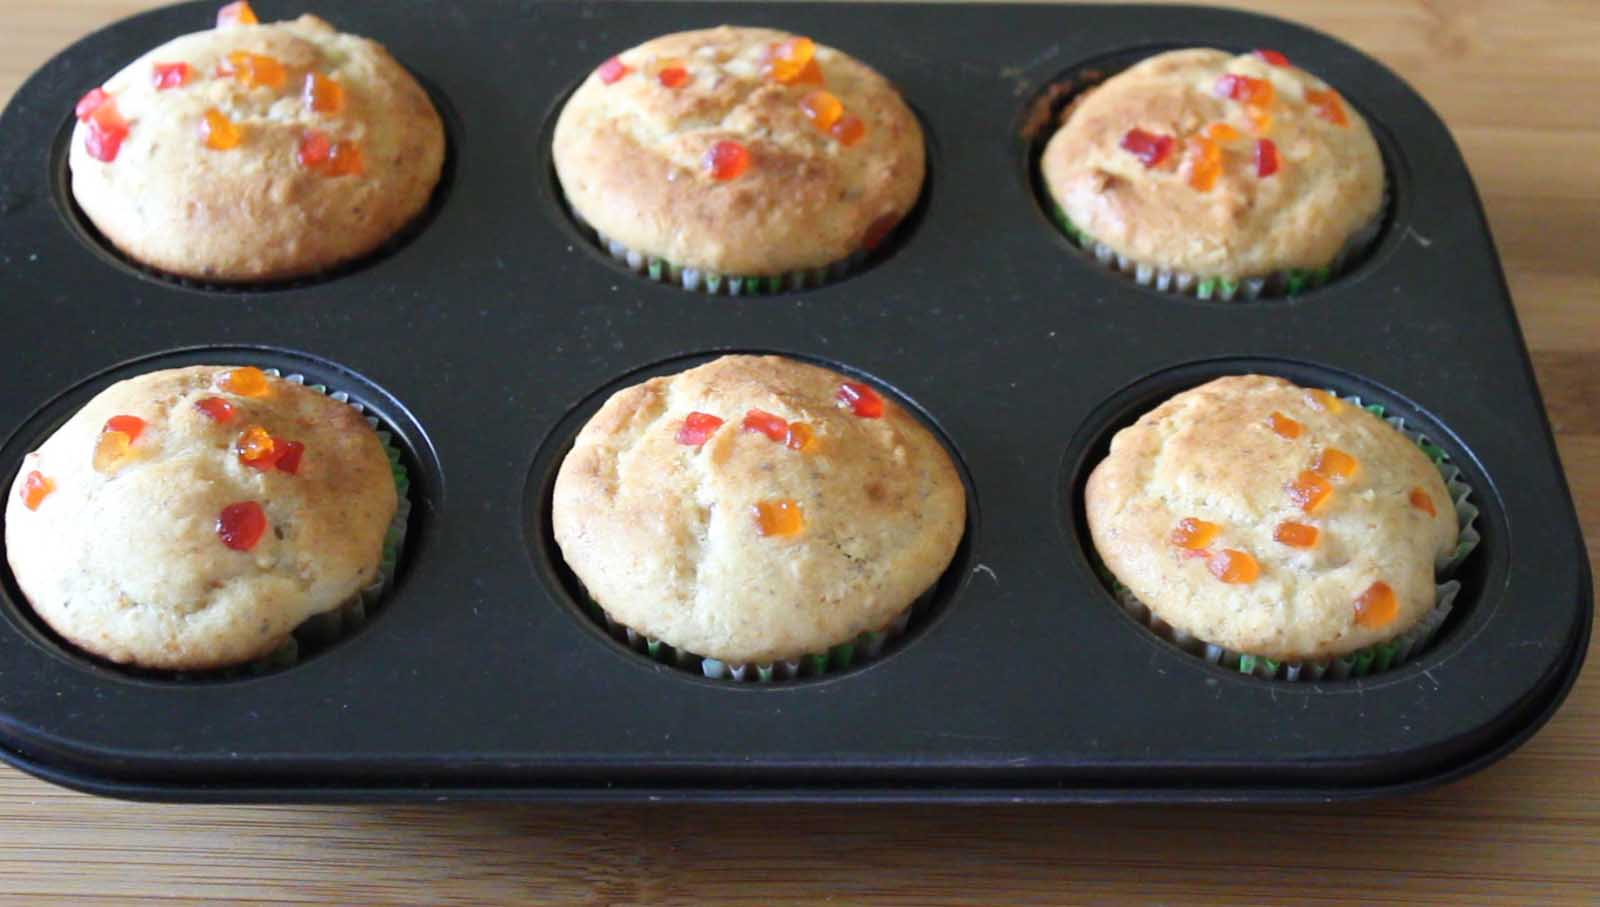 18 bake muffins